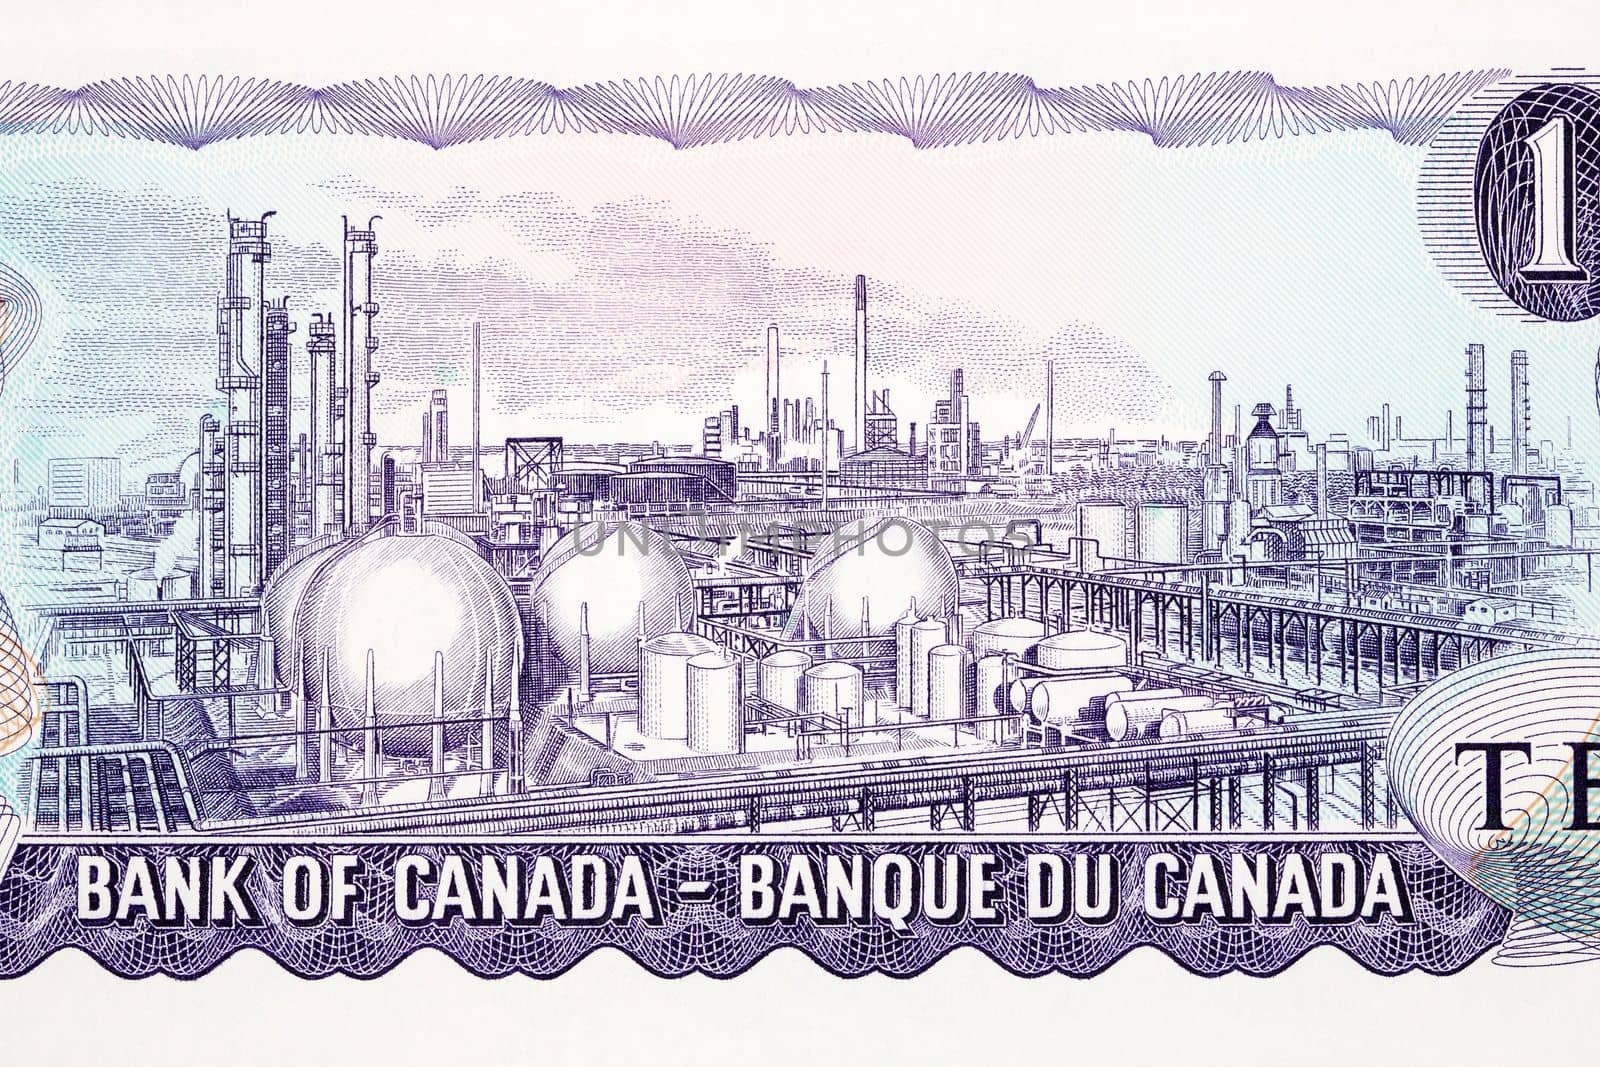 Oil refinery at Sarnia, Ontario from money by johan10